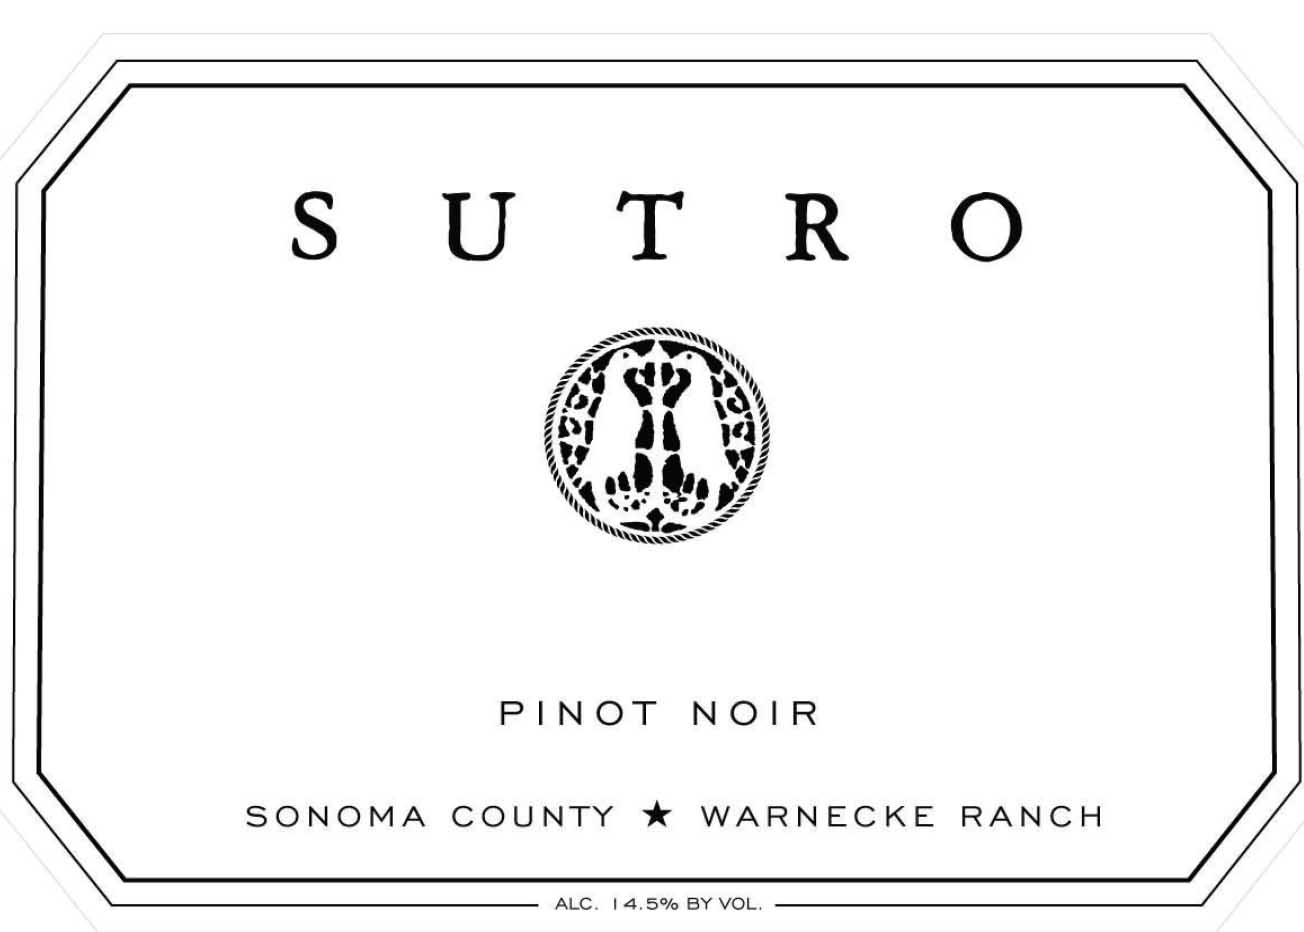 Sutro - Pinot Noir label